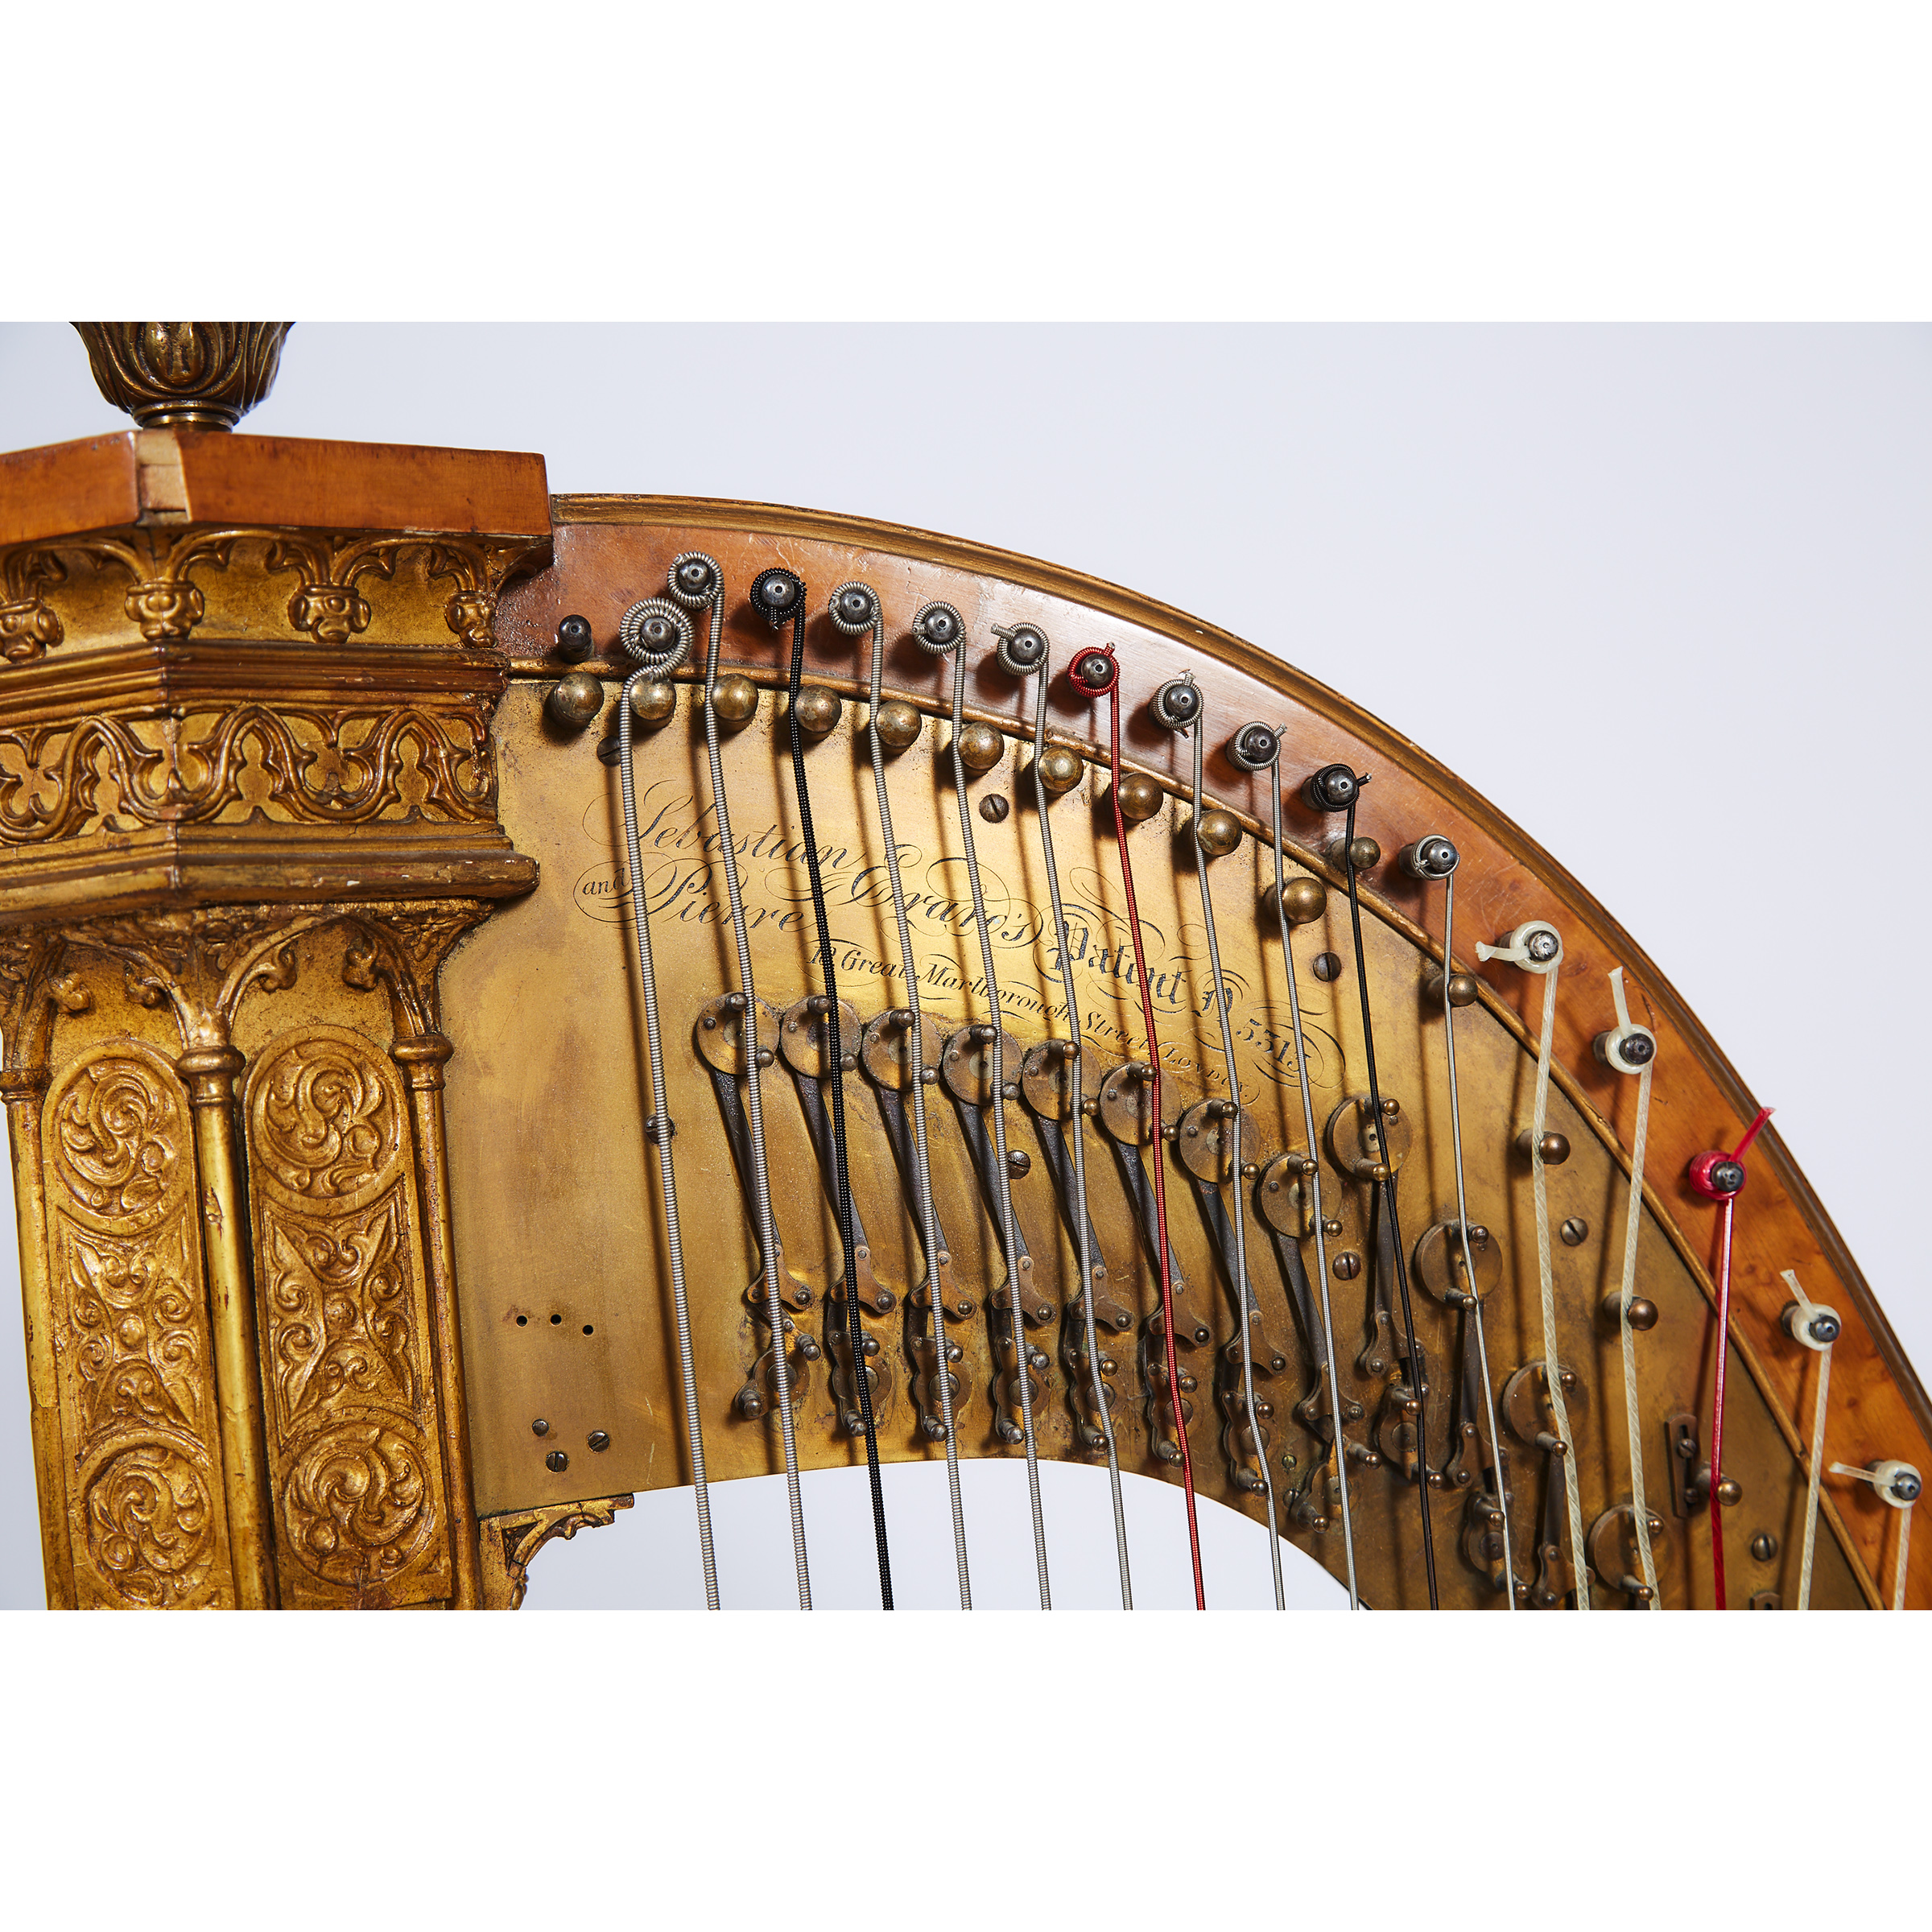 English Maple and Giltwood Seven Pedal Concert Harp, Sebastian and Pierre Erard, 18 Great Marlborough London, 19th century